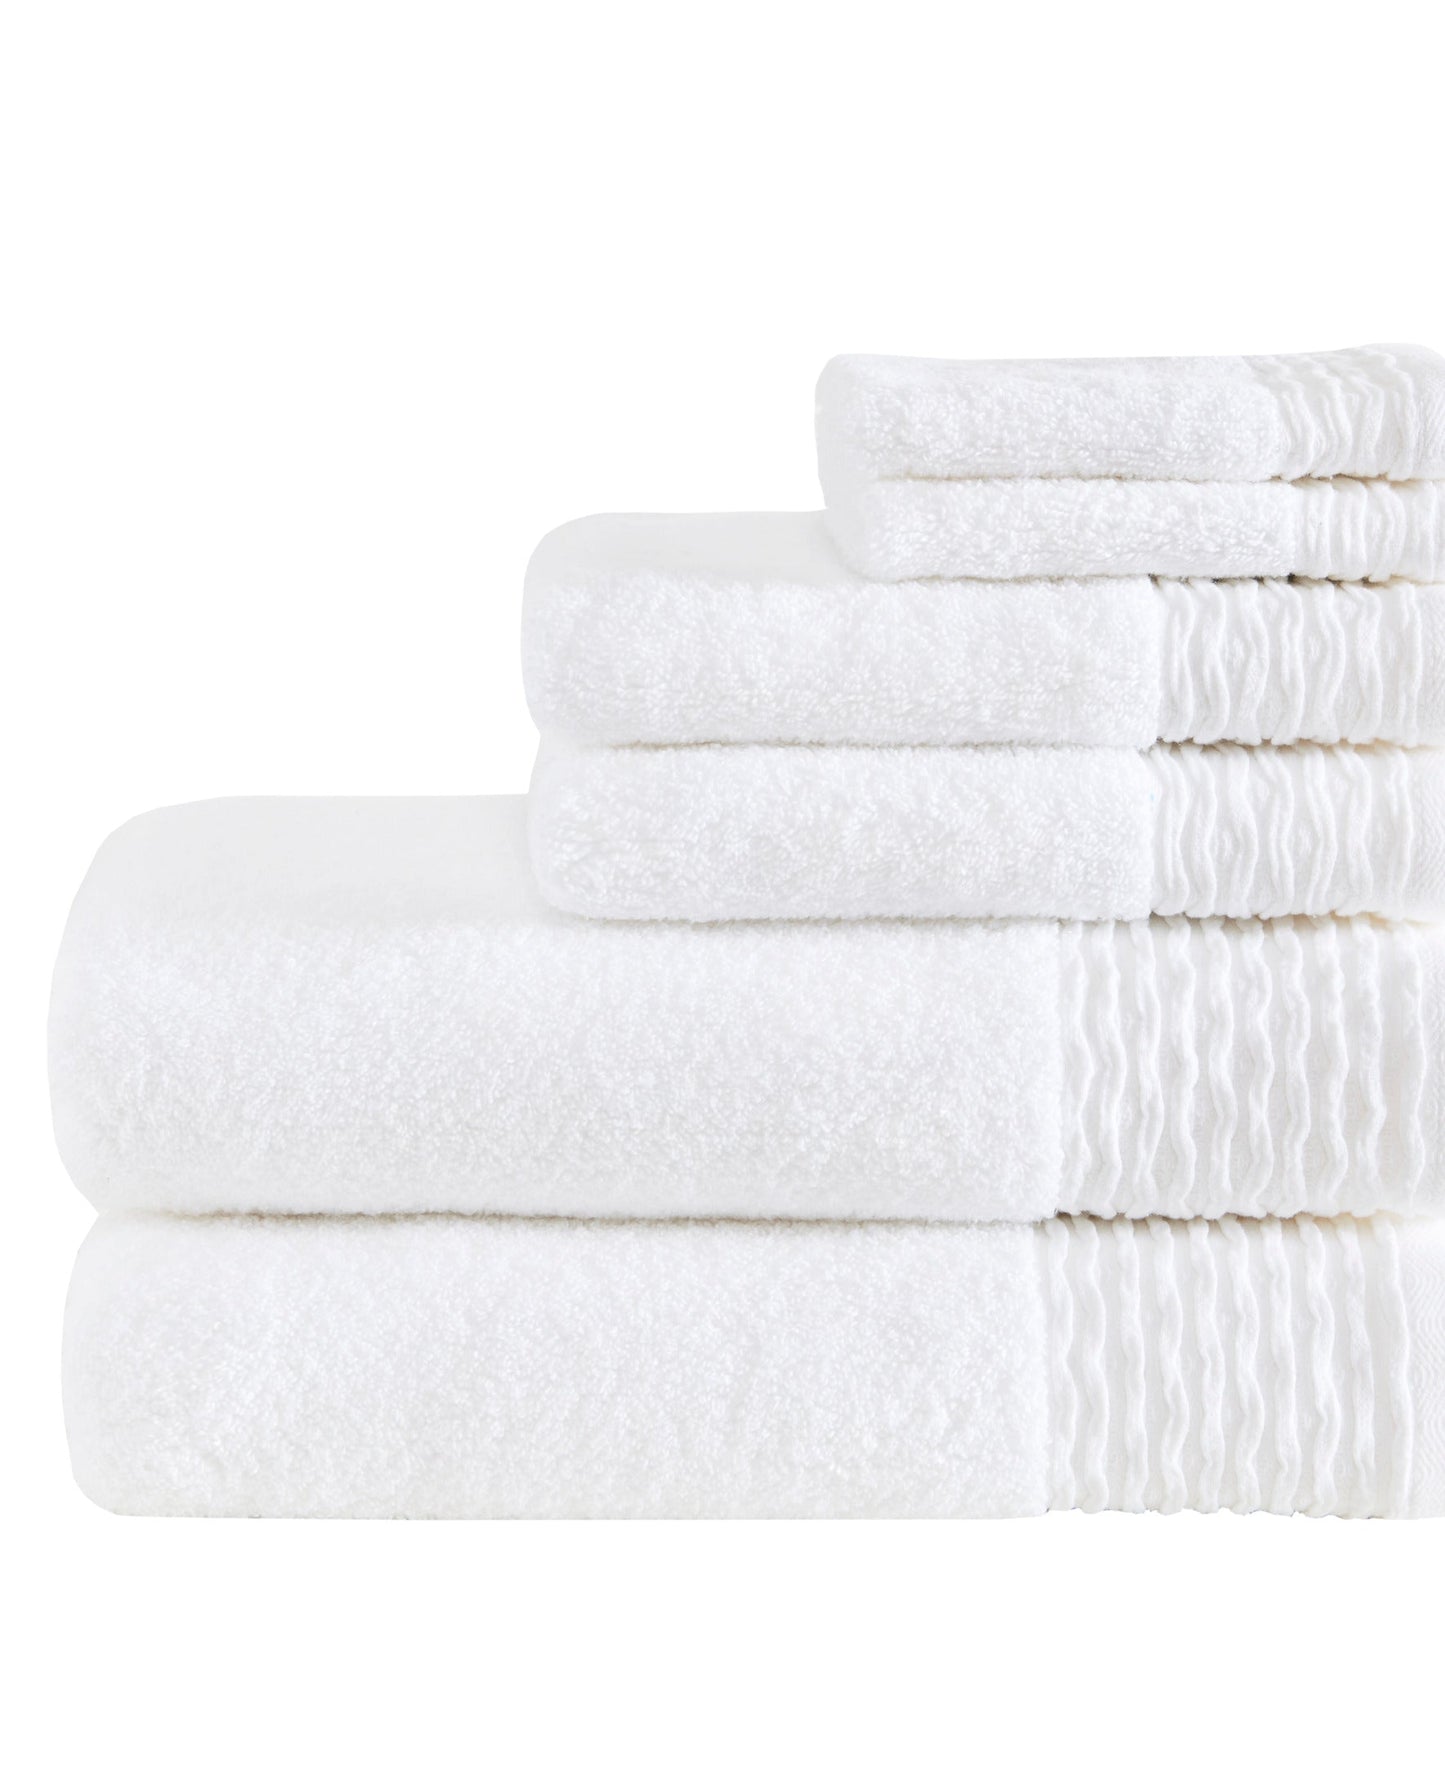 Curv Jacquard Wavy Border Zero Twist Antimicrobial Cotton 6 Piece Towel Set